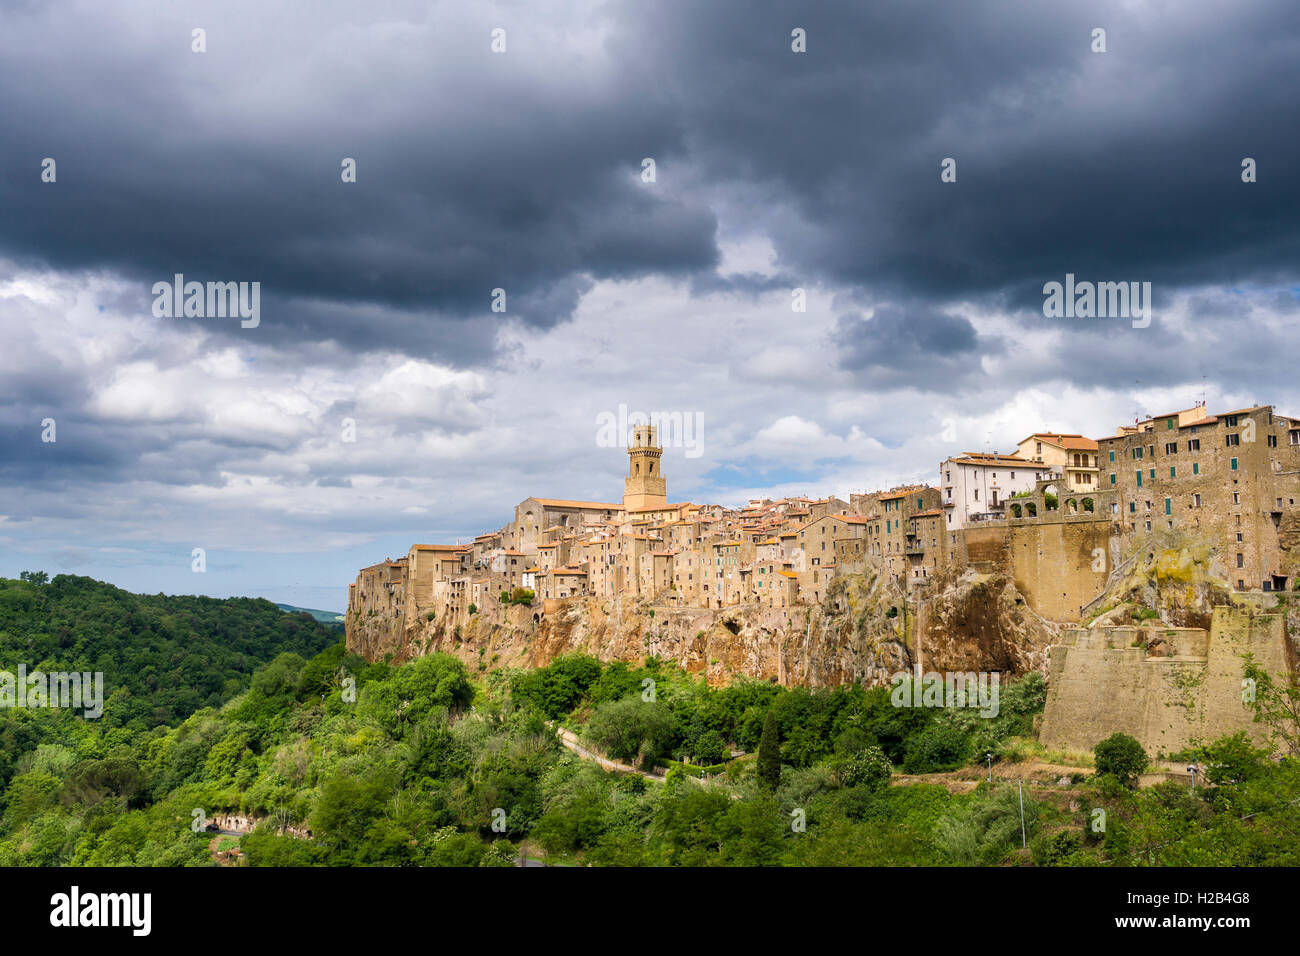 Stadt auf dem Hügel und bewölkter Himmel, Pitigliano, Toskana, Italien Stockfoto